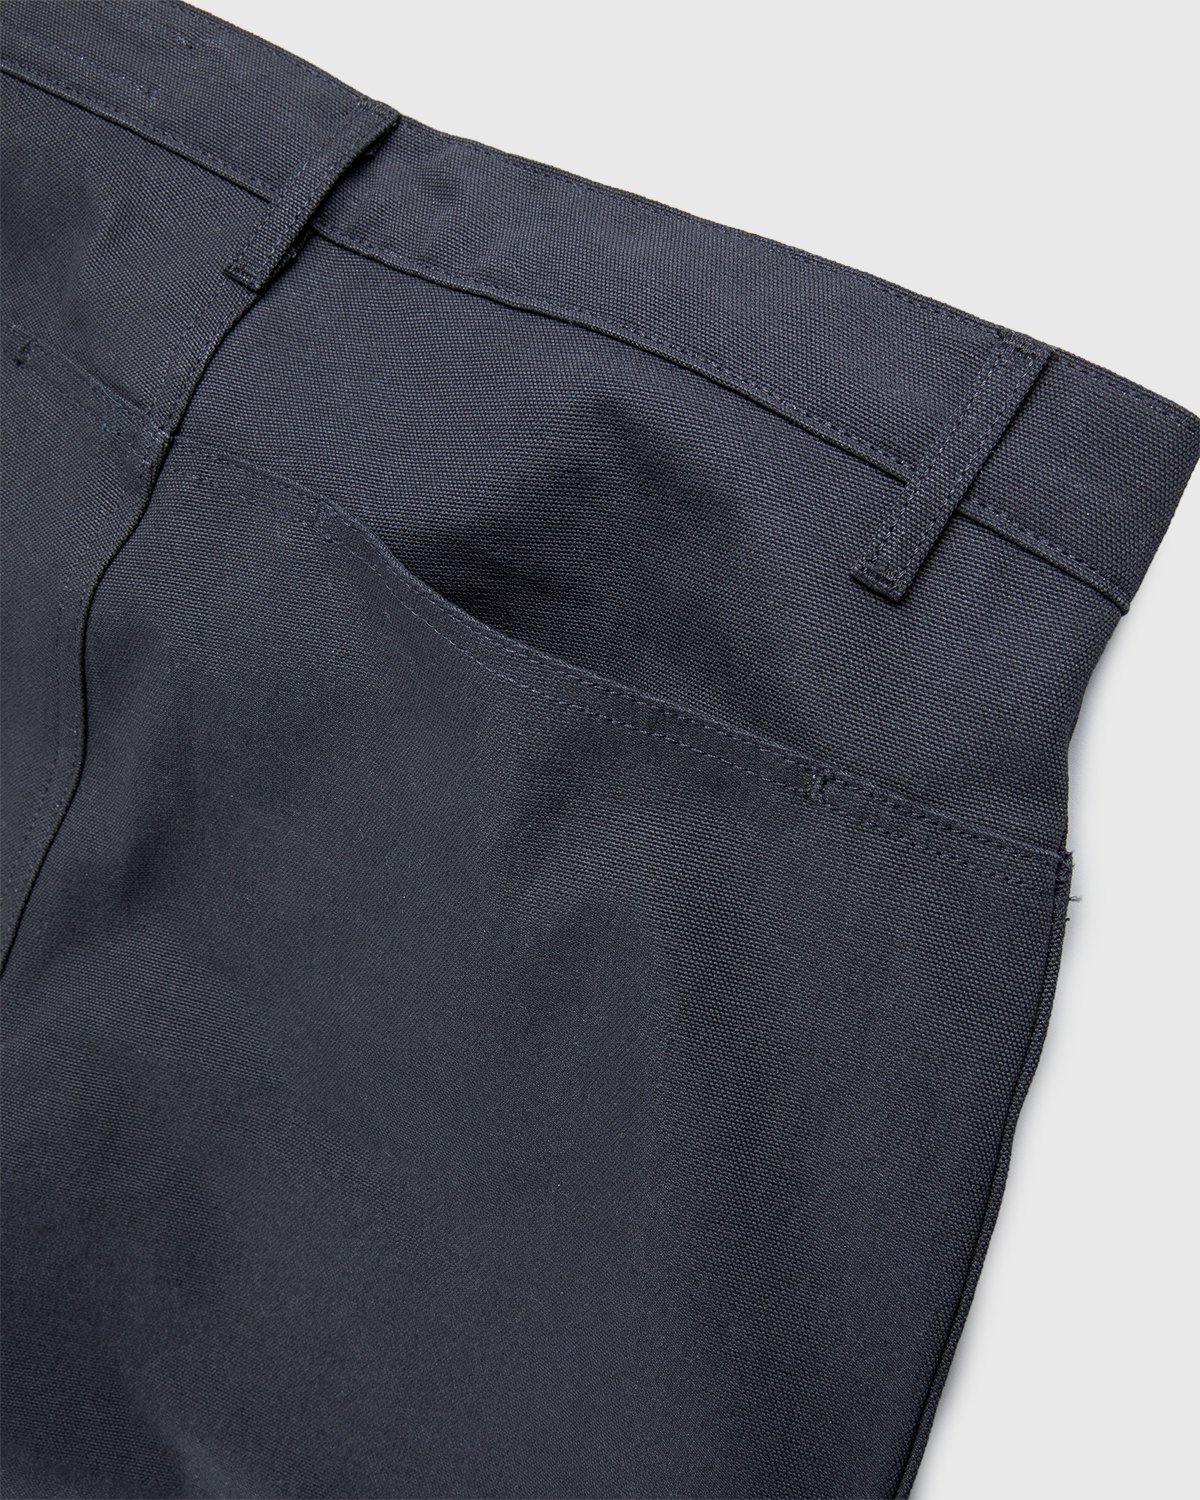 Darryl Brown - Trouser Vintage Black - Clothing - Black - Image 4